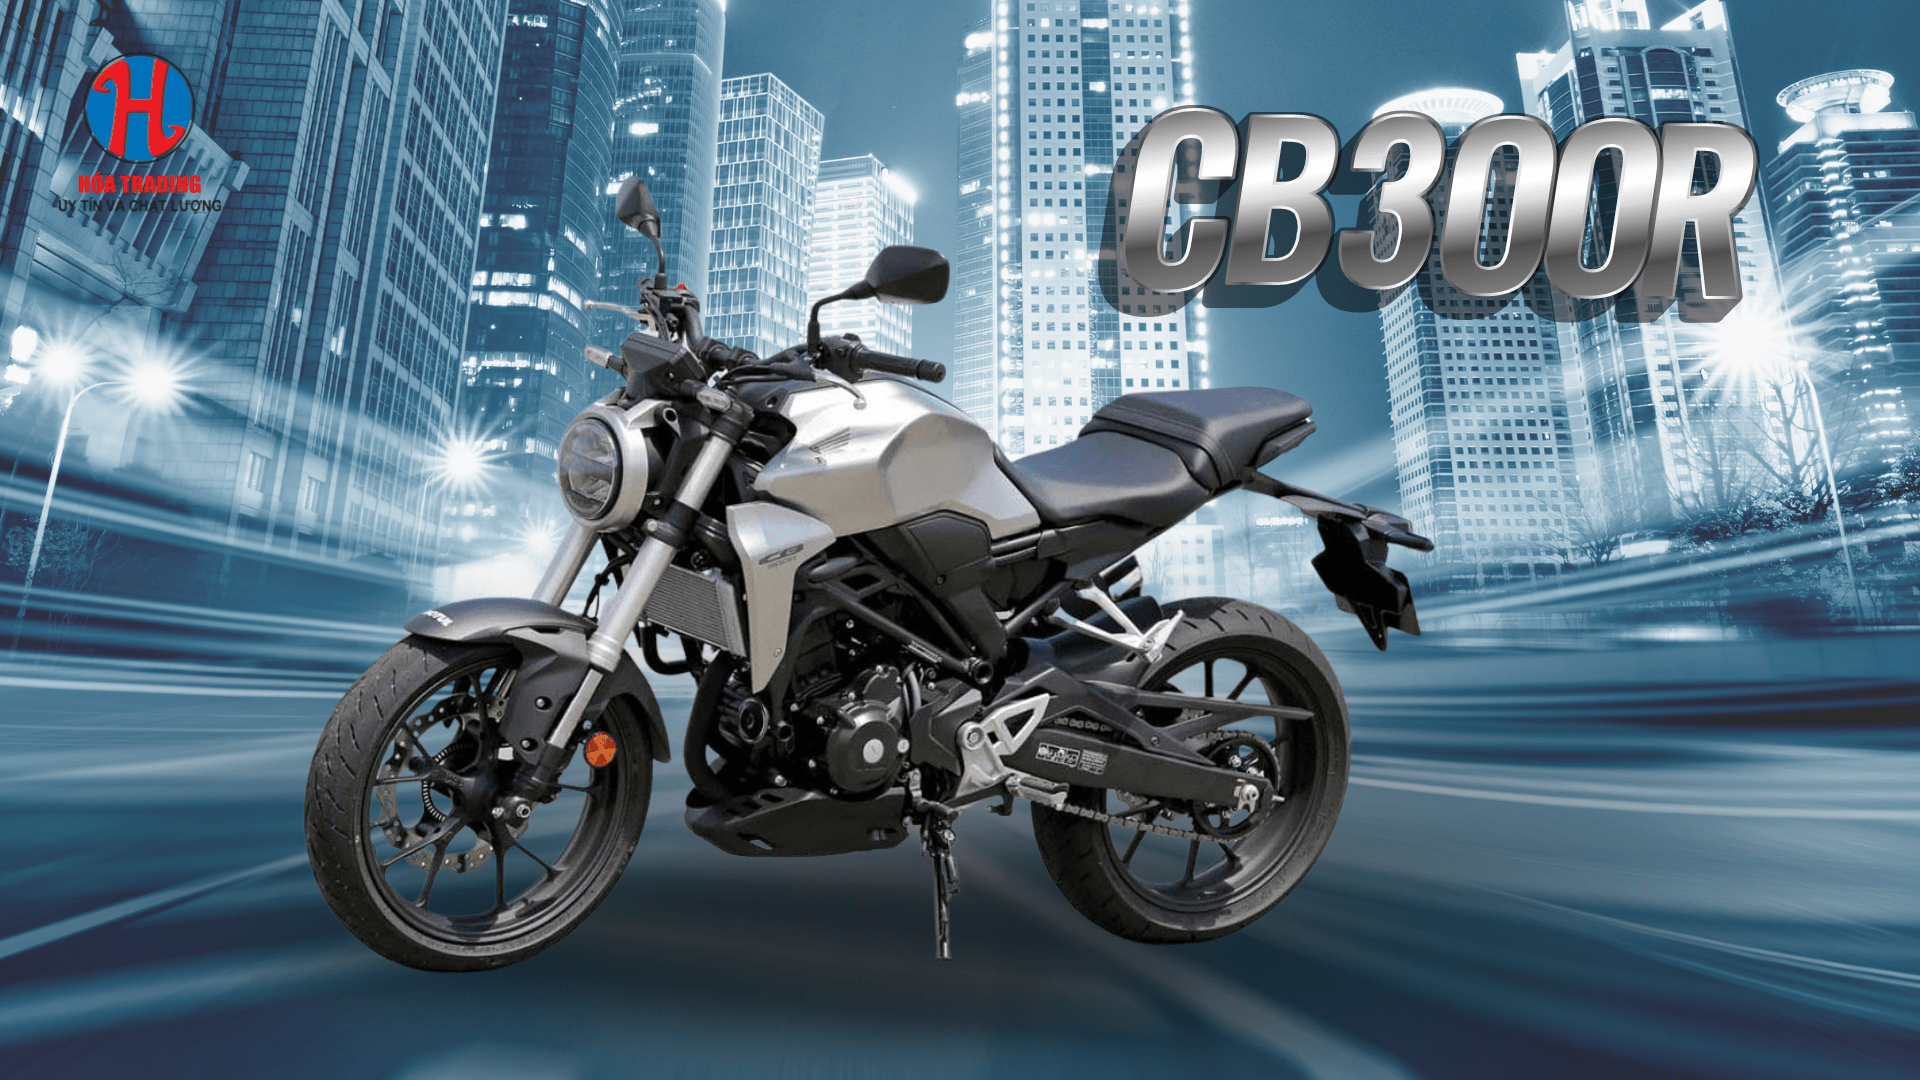 Honda CB300R ABS motorcycles for sale - MotoHunt